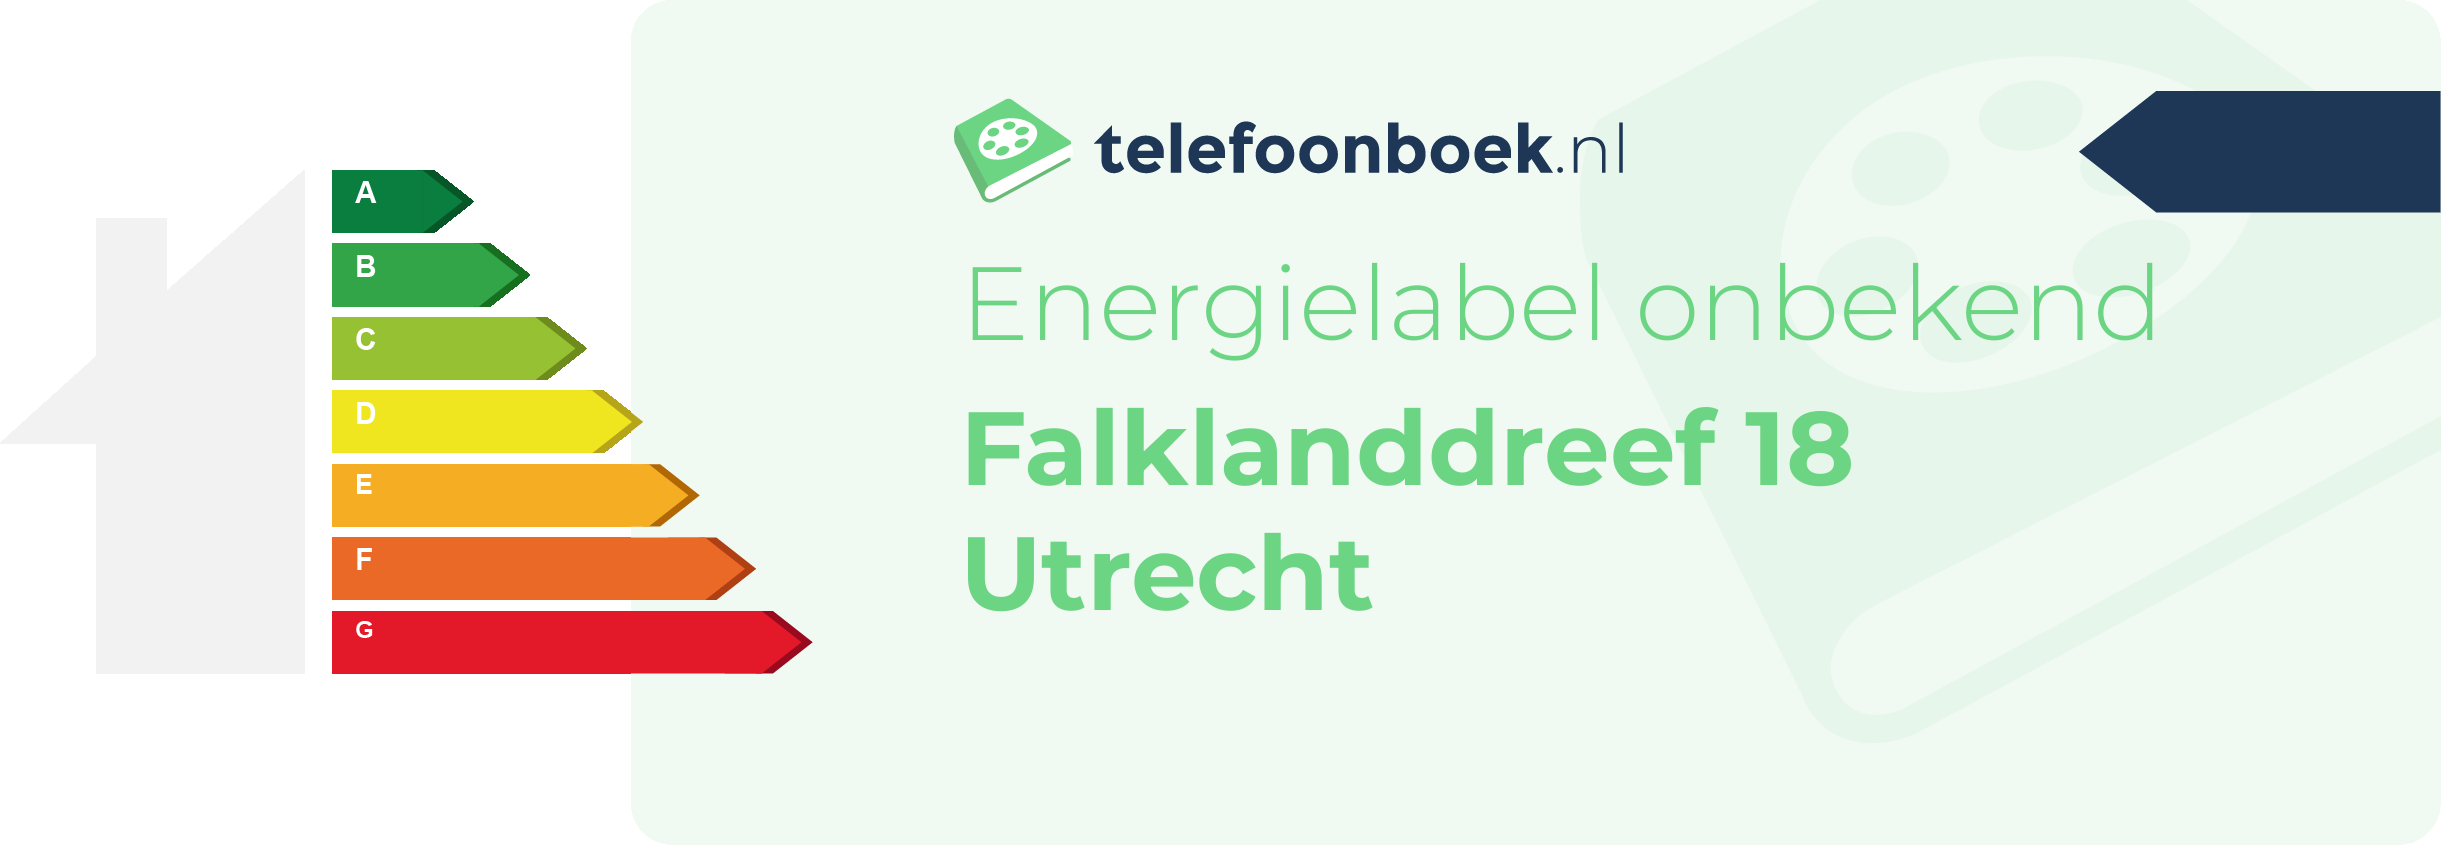 Energielabel Falklanddreef 18 Utrecht